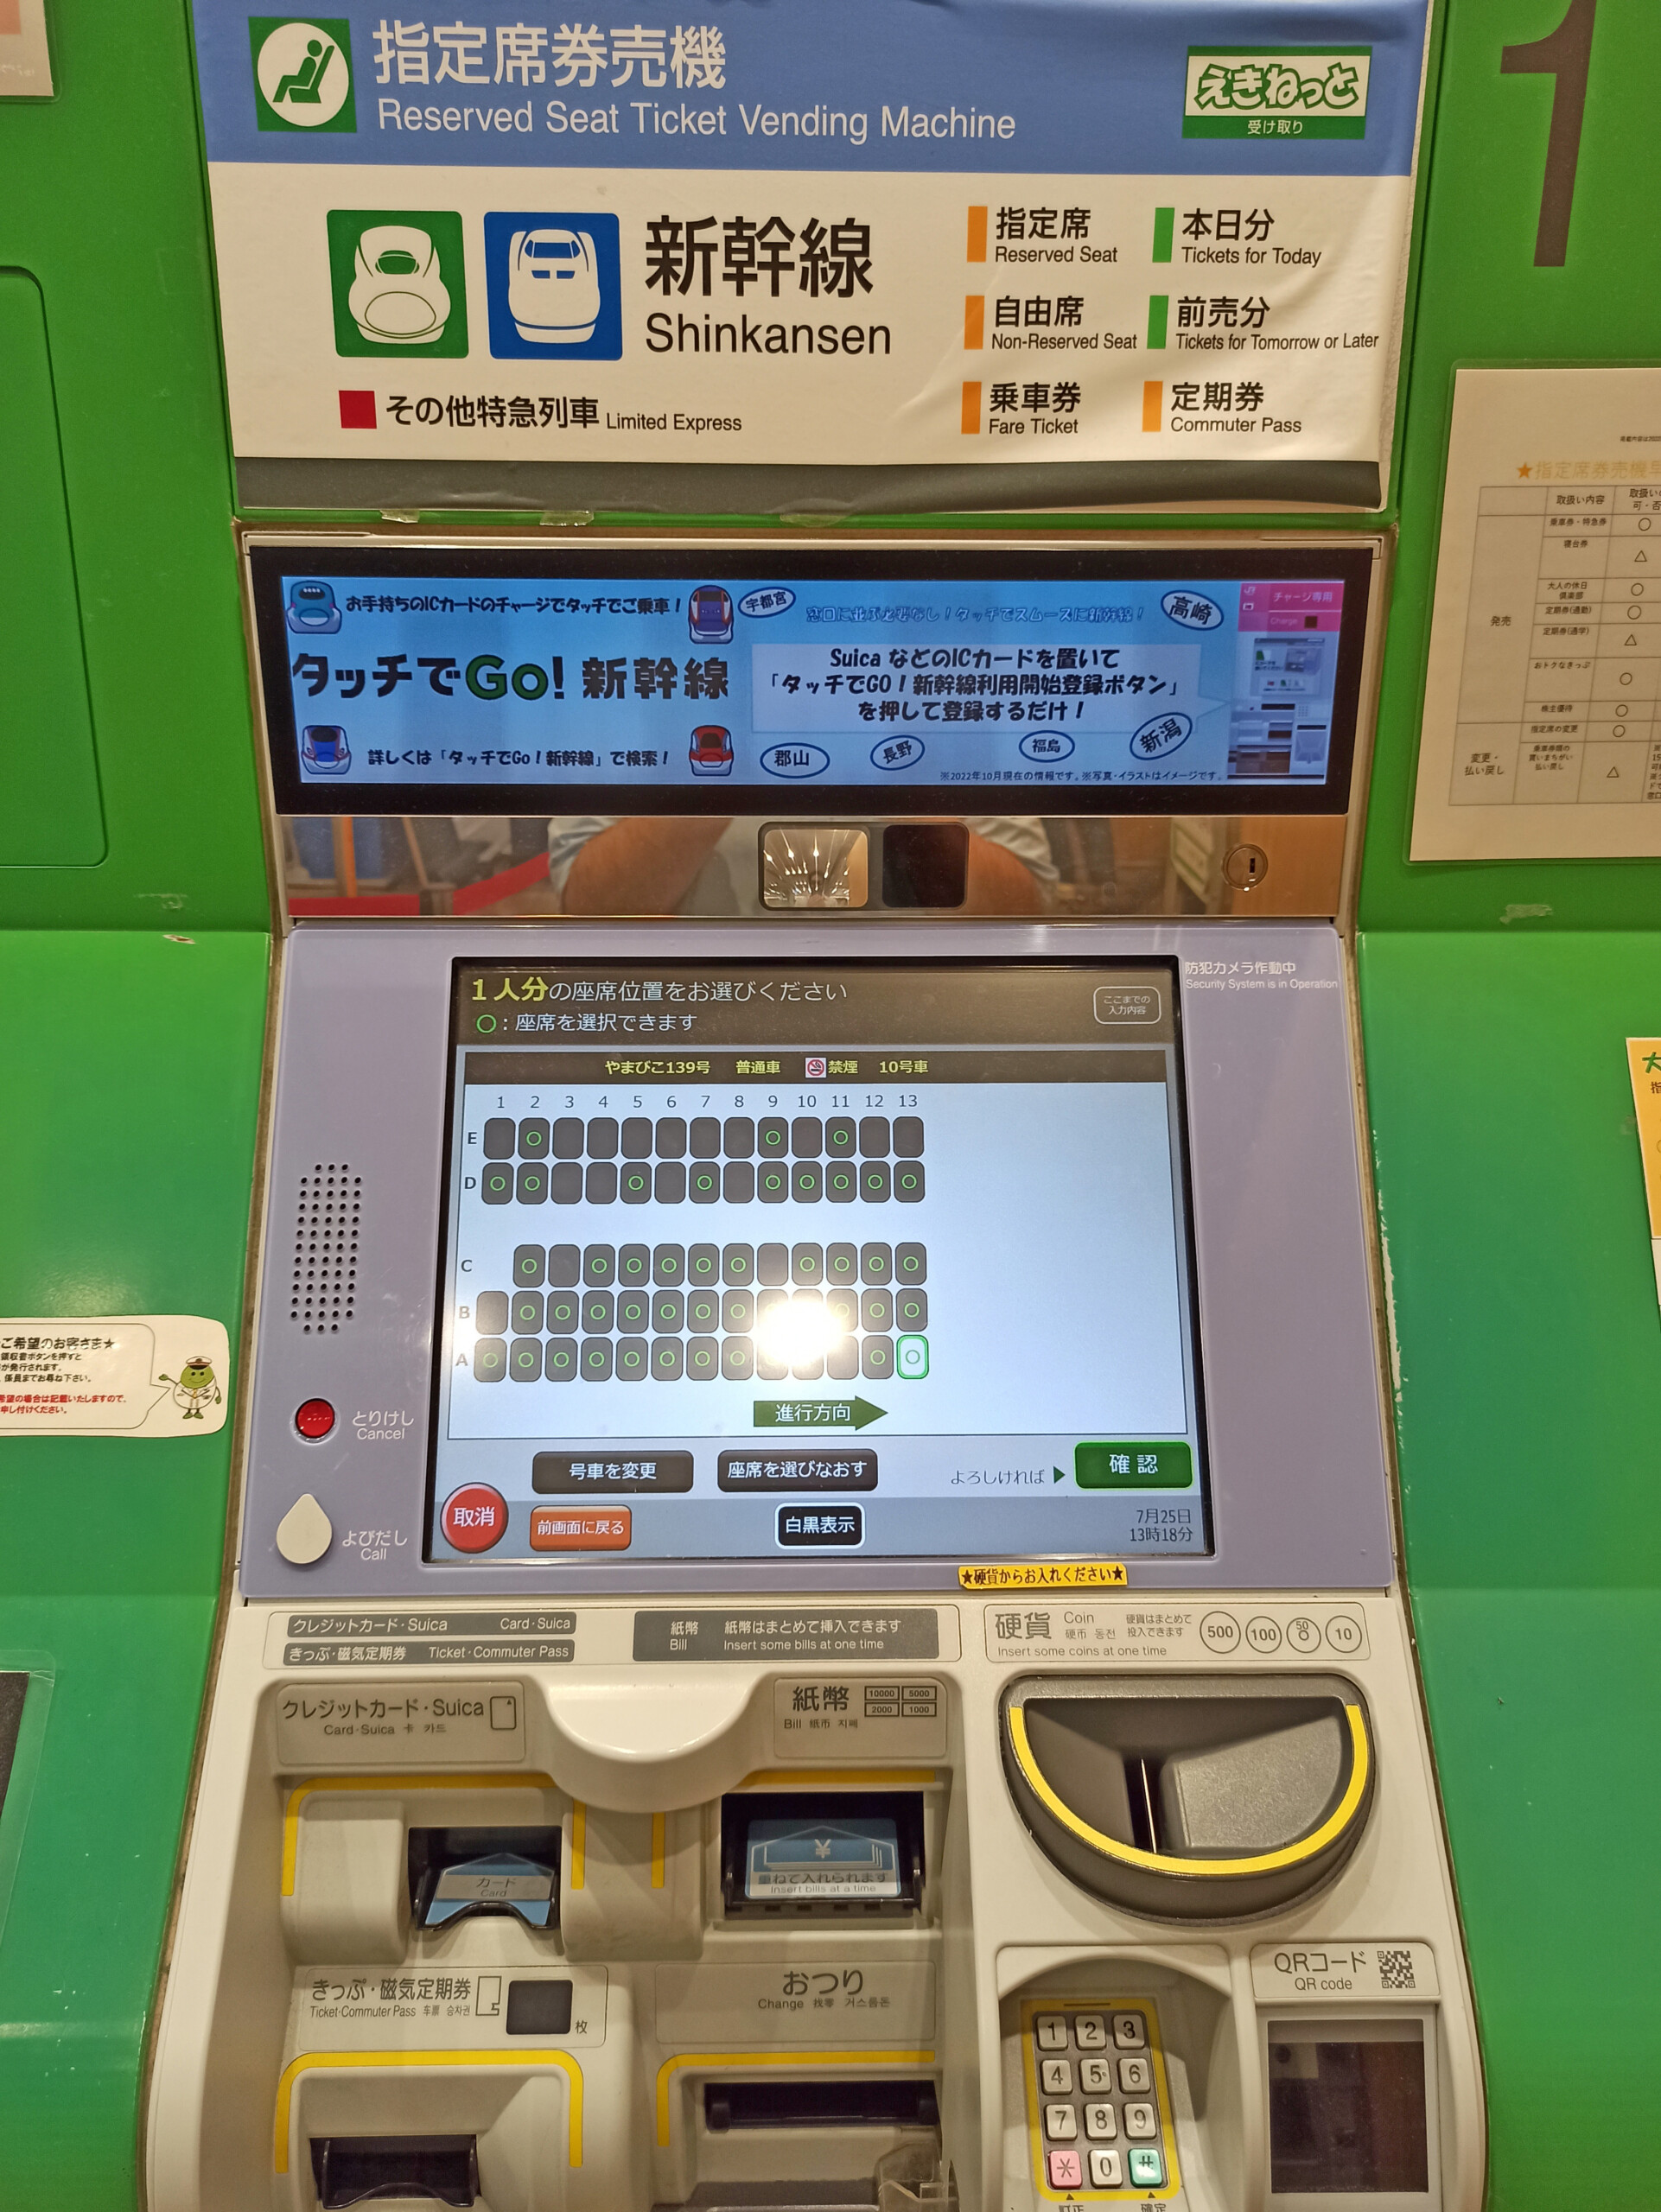 JR Train Ticket Machines in Japan